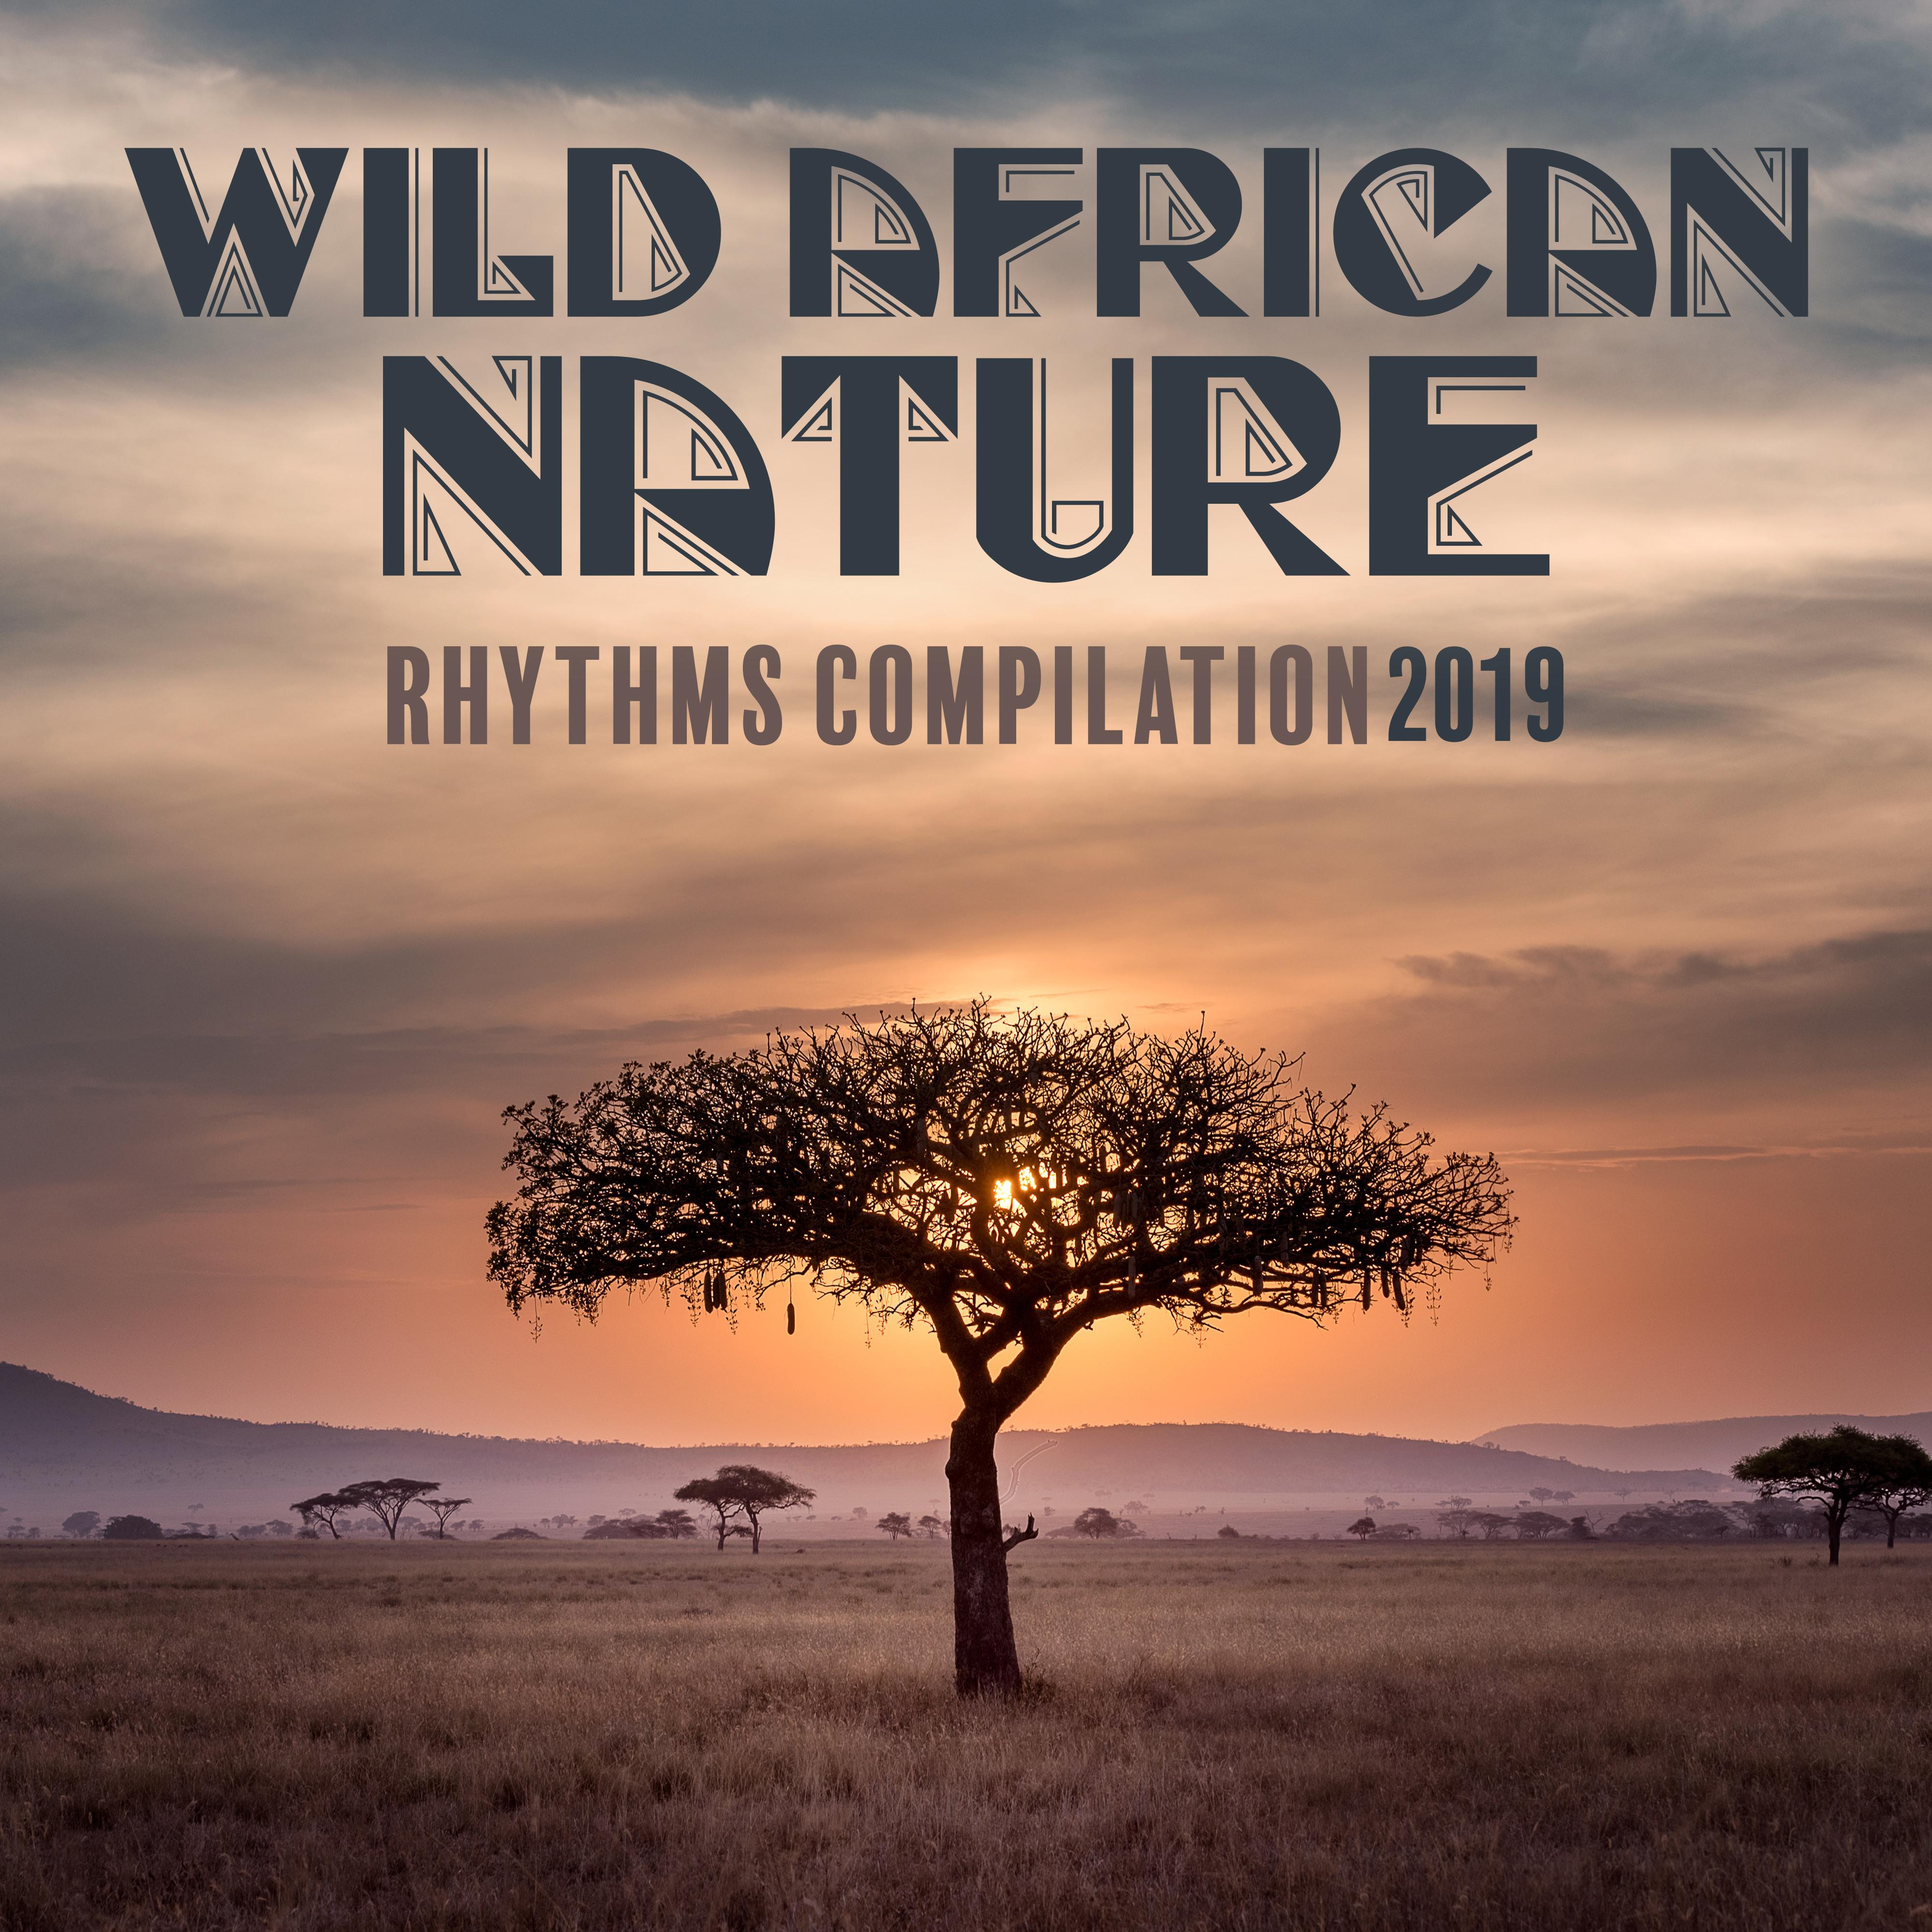 Wild African Nature Rhythms Compilation 2019